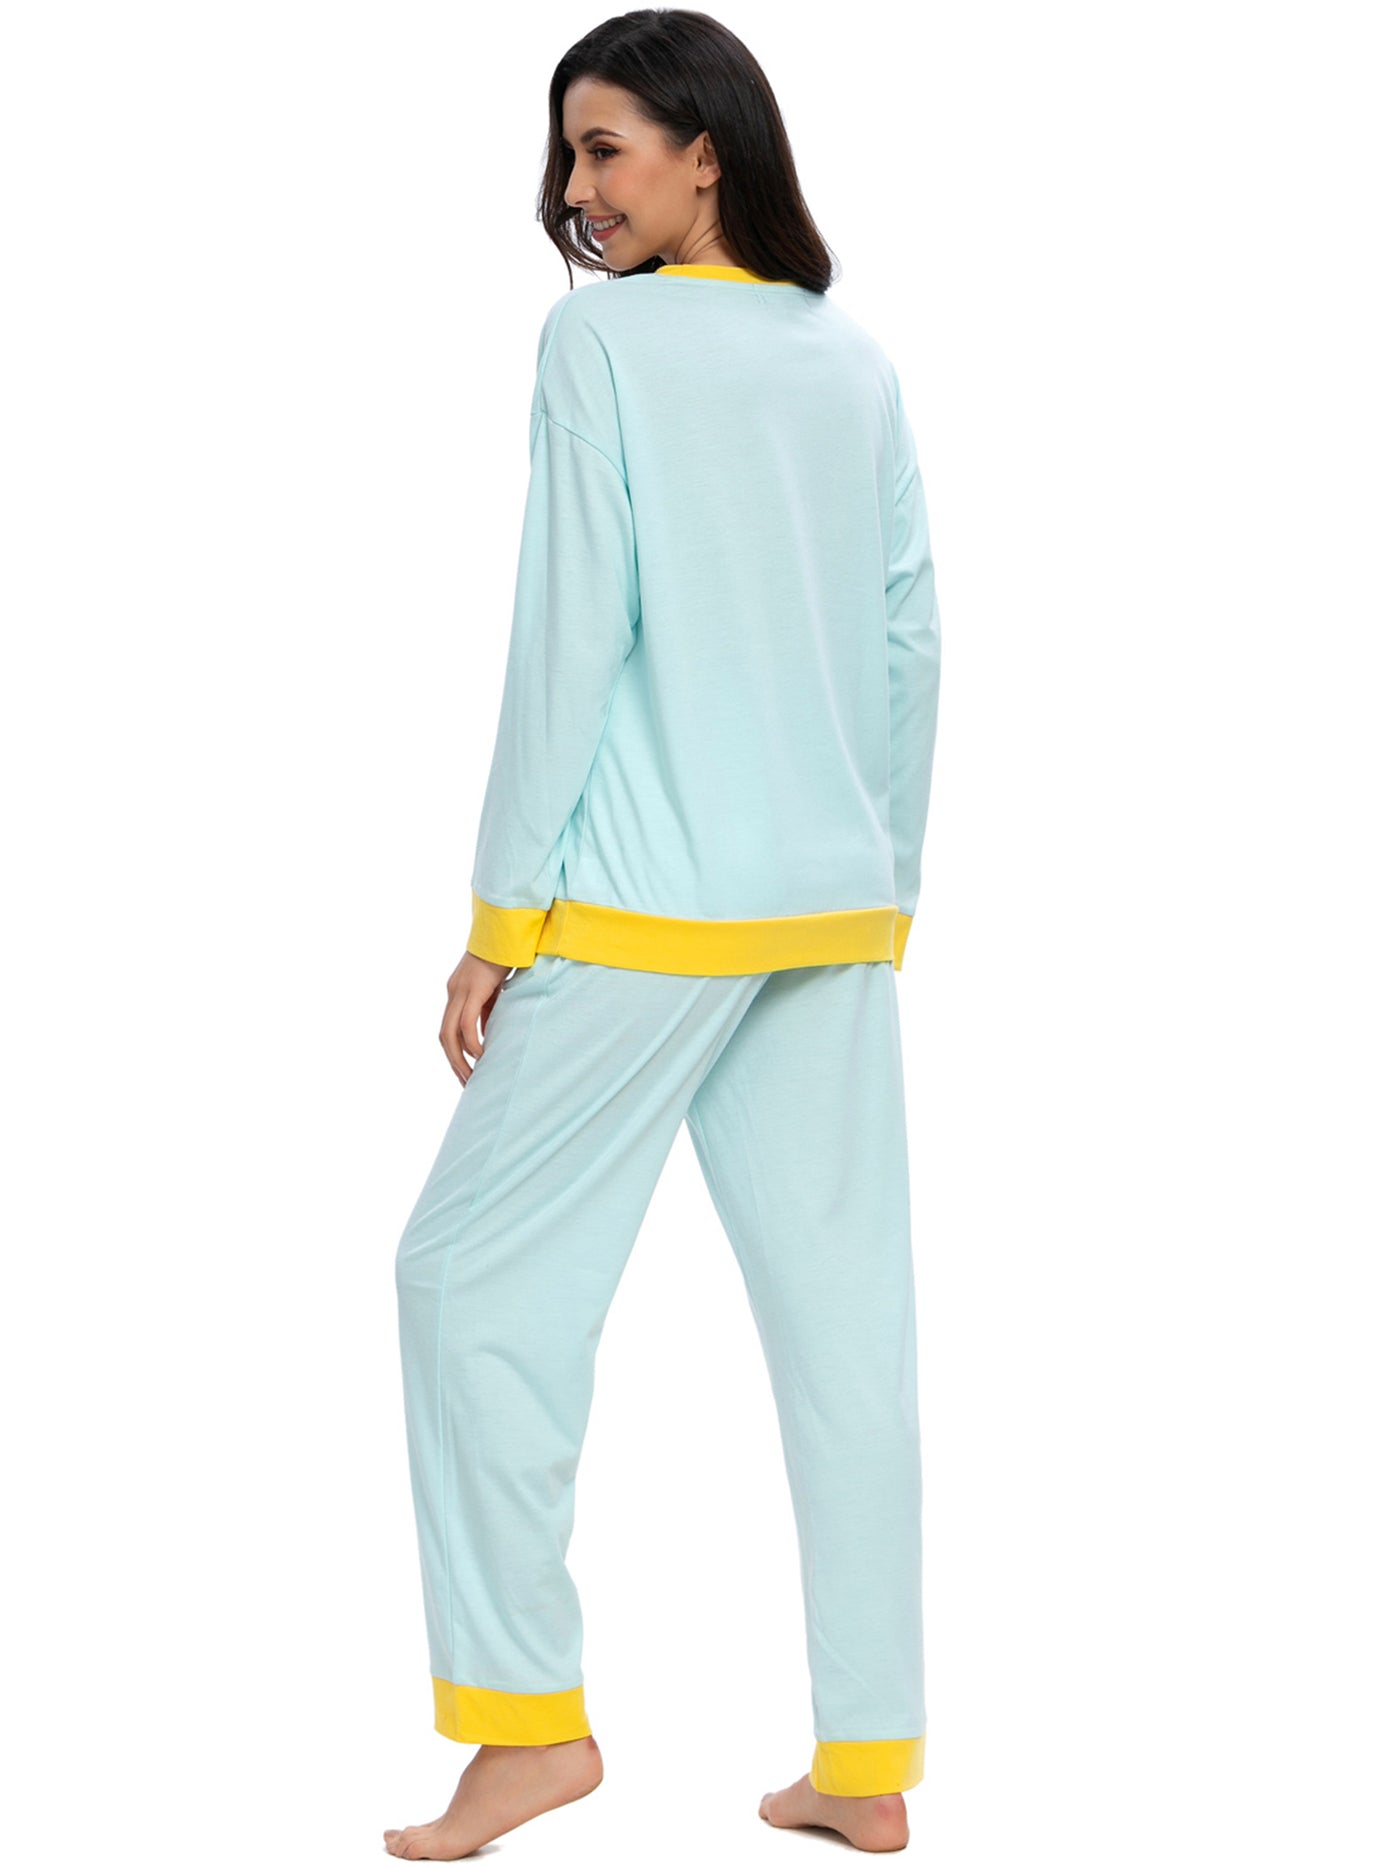 Bublédon Sleepwear Round Neck Soft Loungewear with Pants Pajama Set